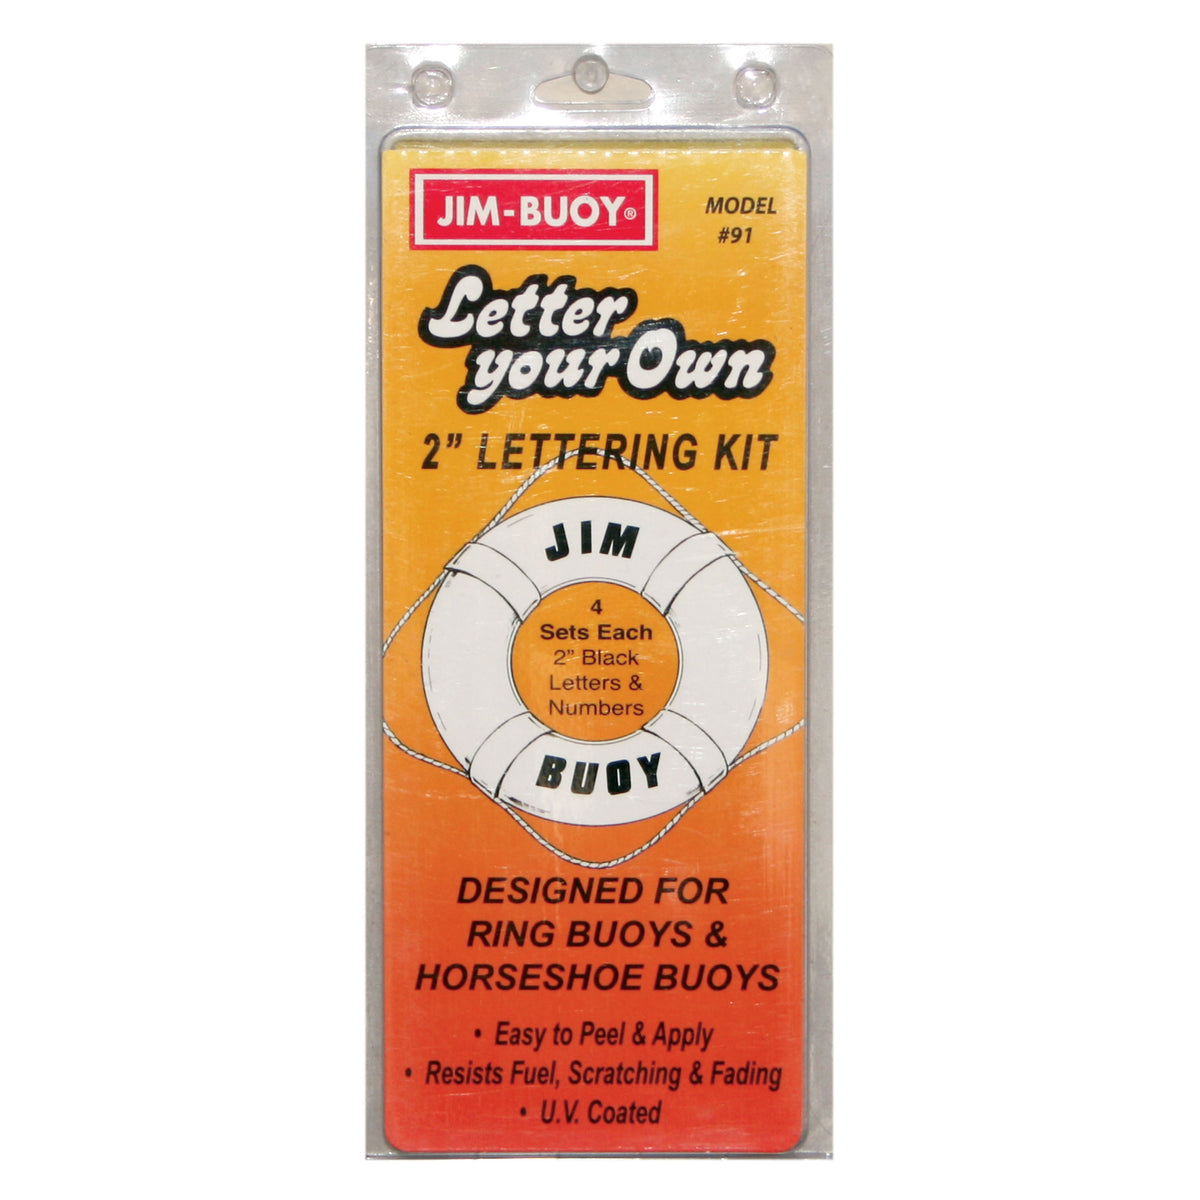 Jim-Buoy 91 Lettering Kit